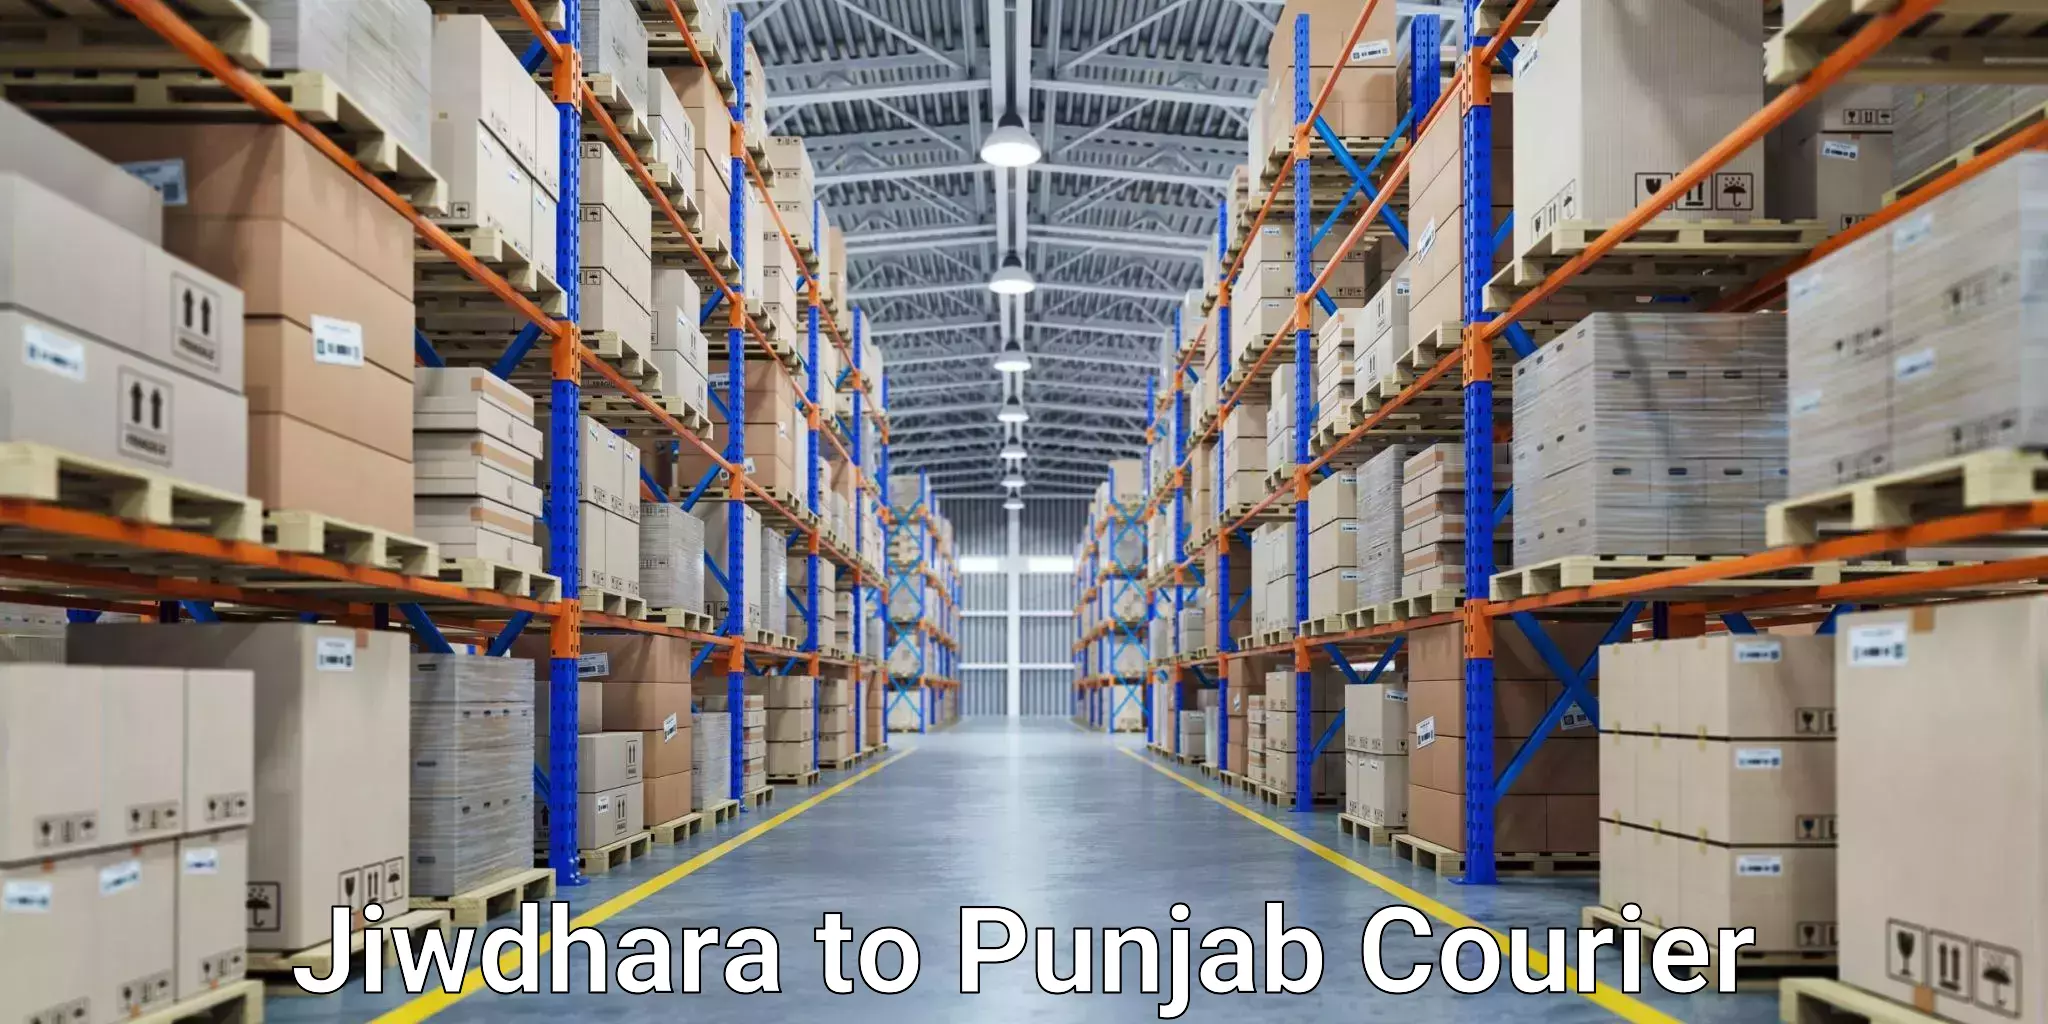 Flexible delivery scheduling Jiwdhara to Punjab